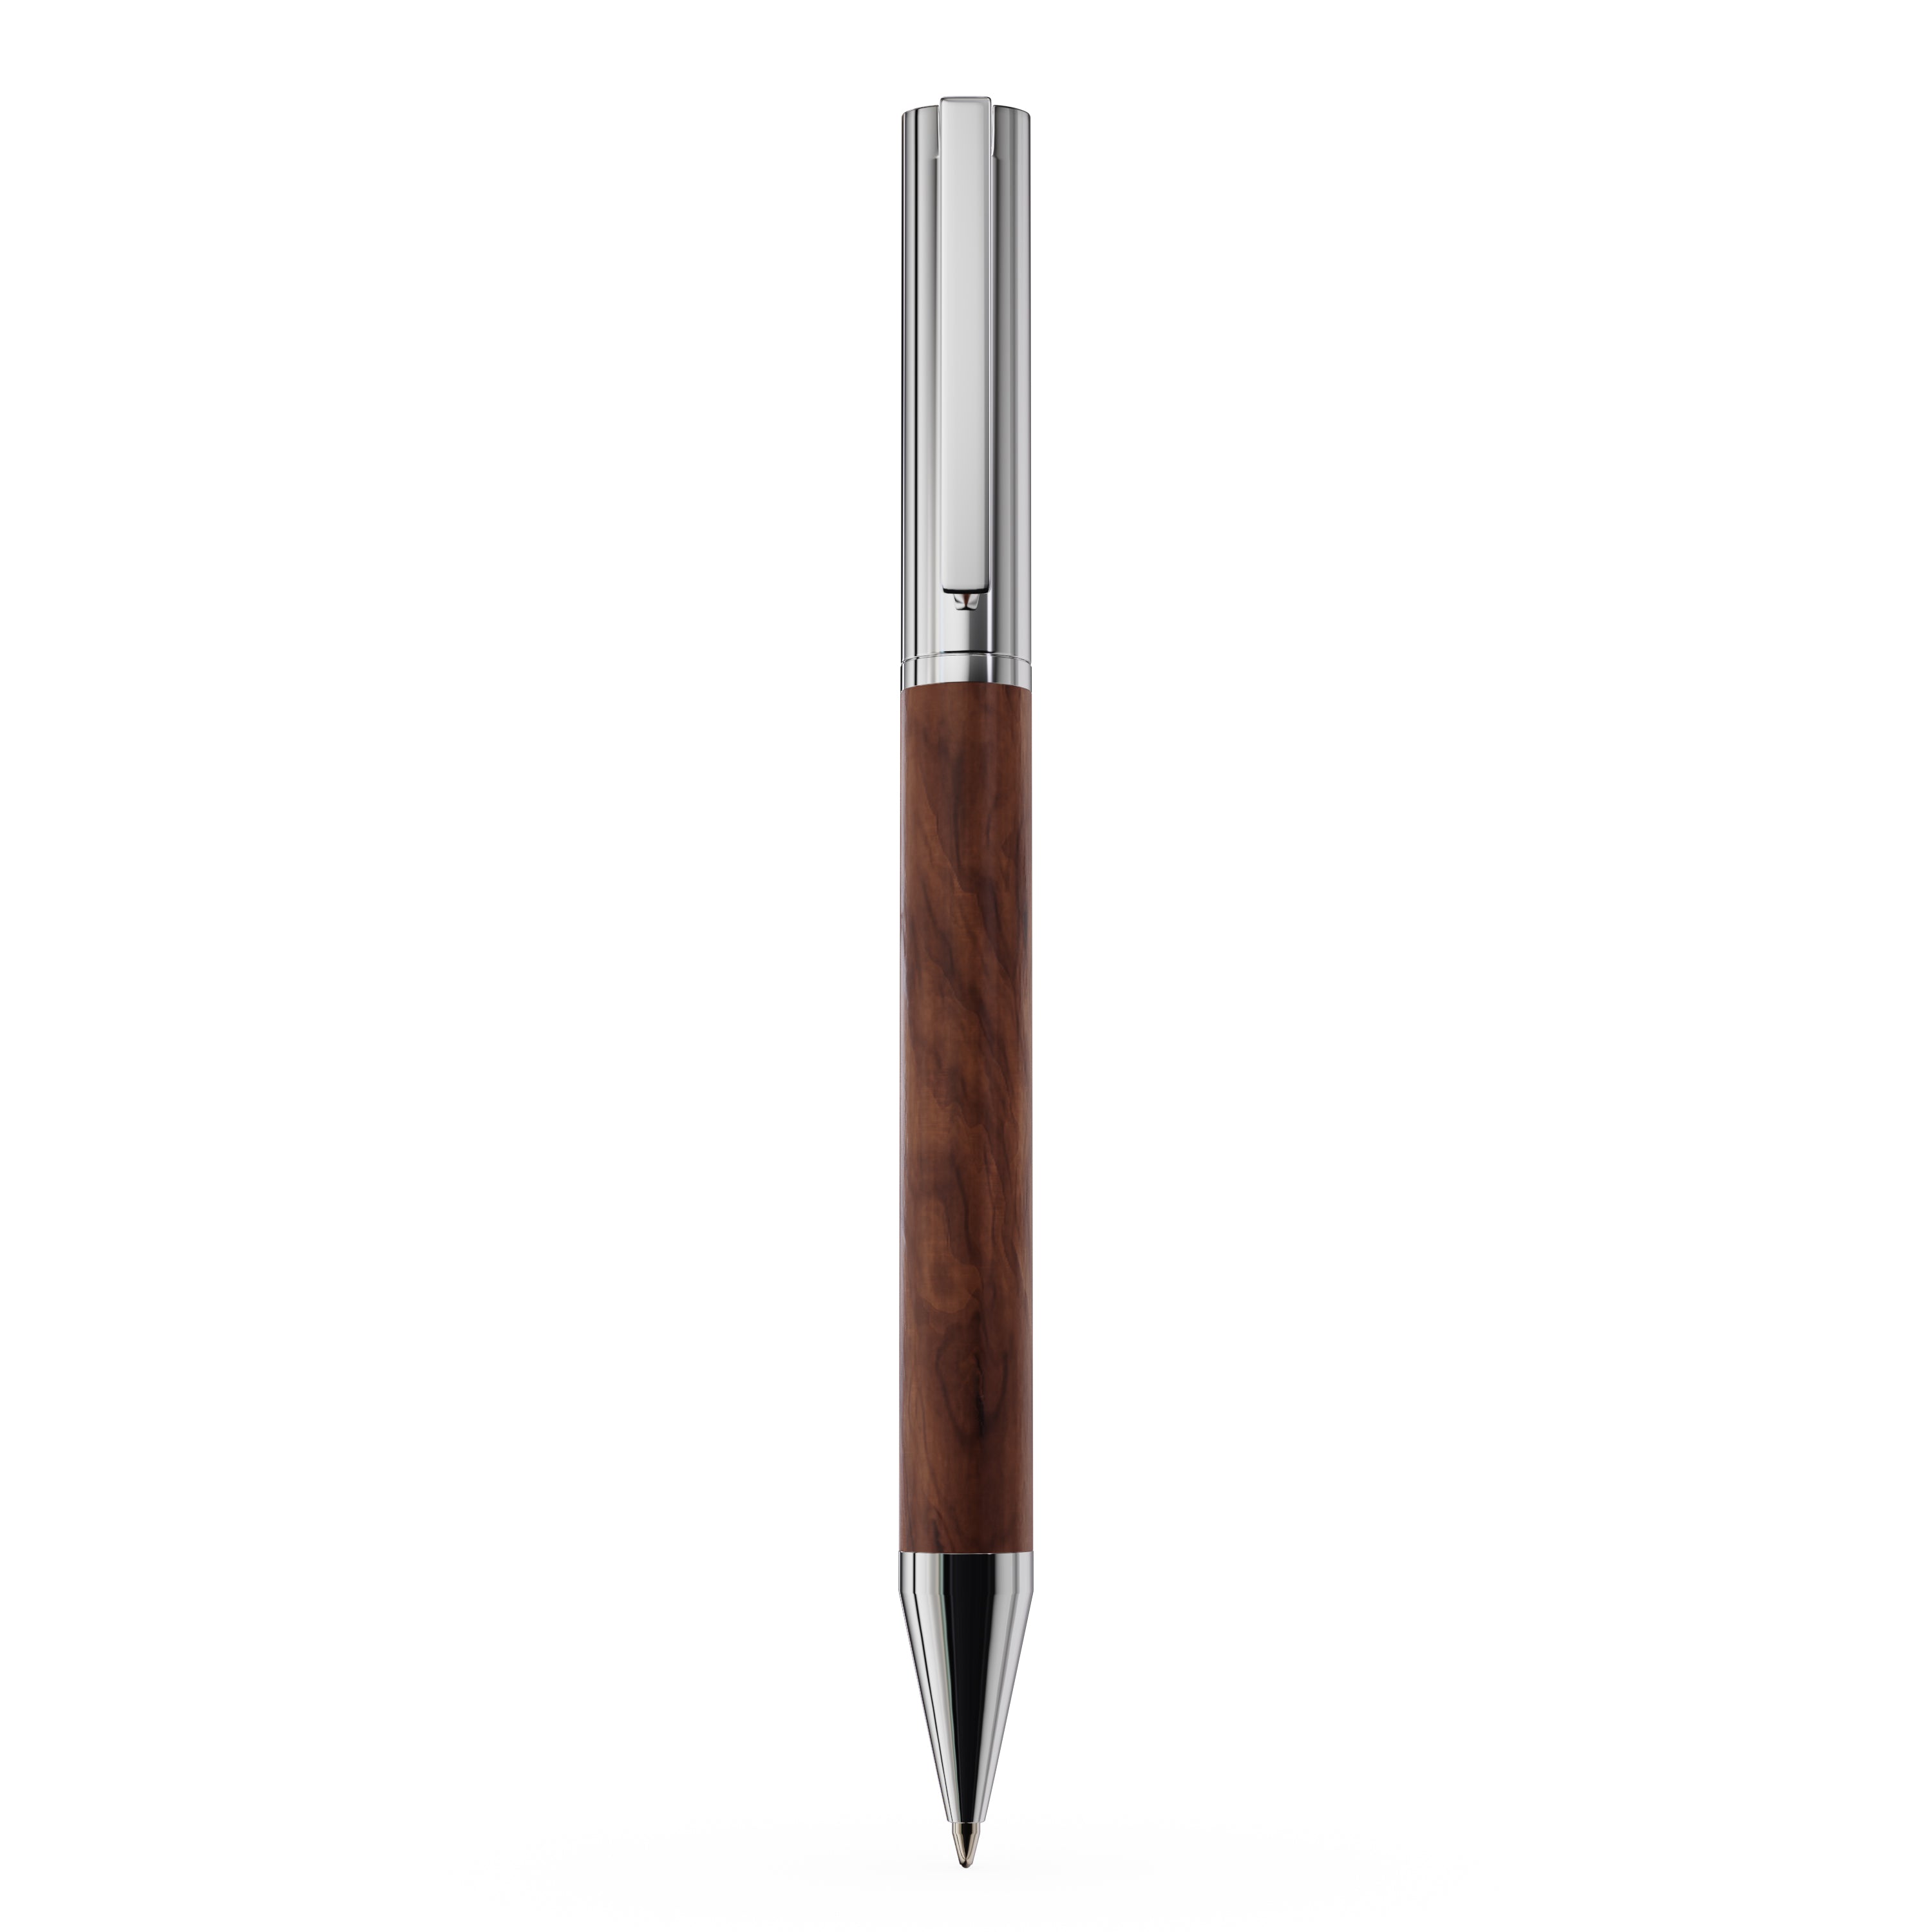 Customized Belmond bamboo ballpoint pen in walnut.